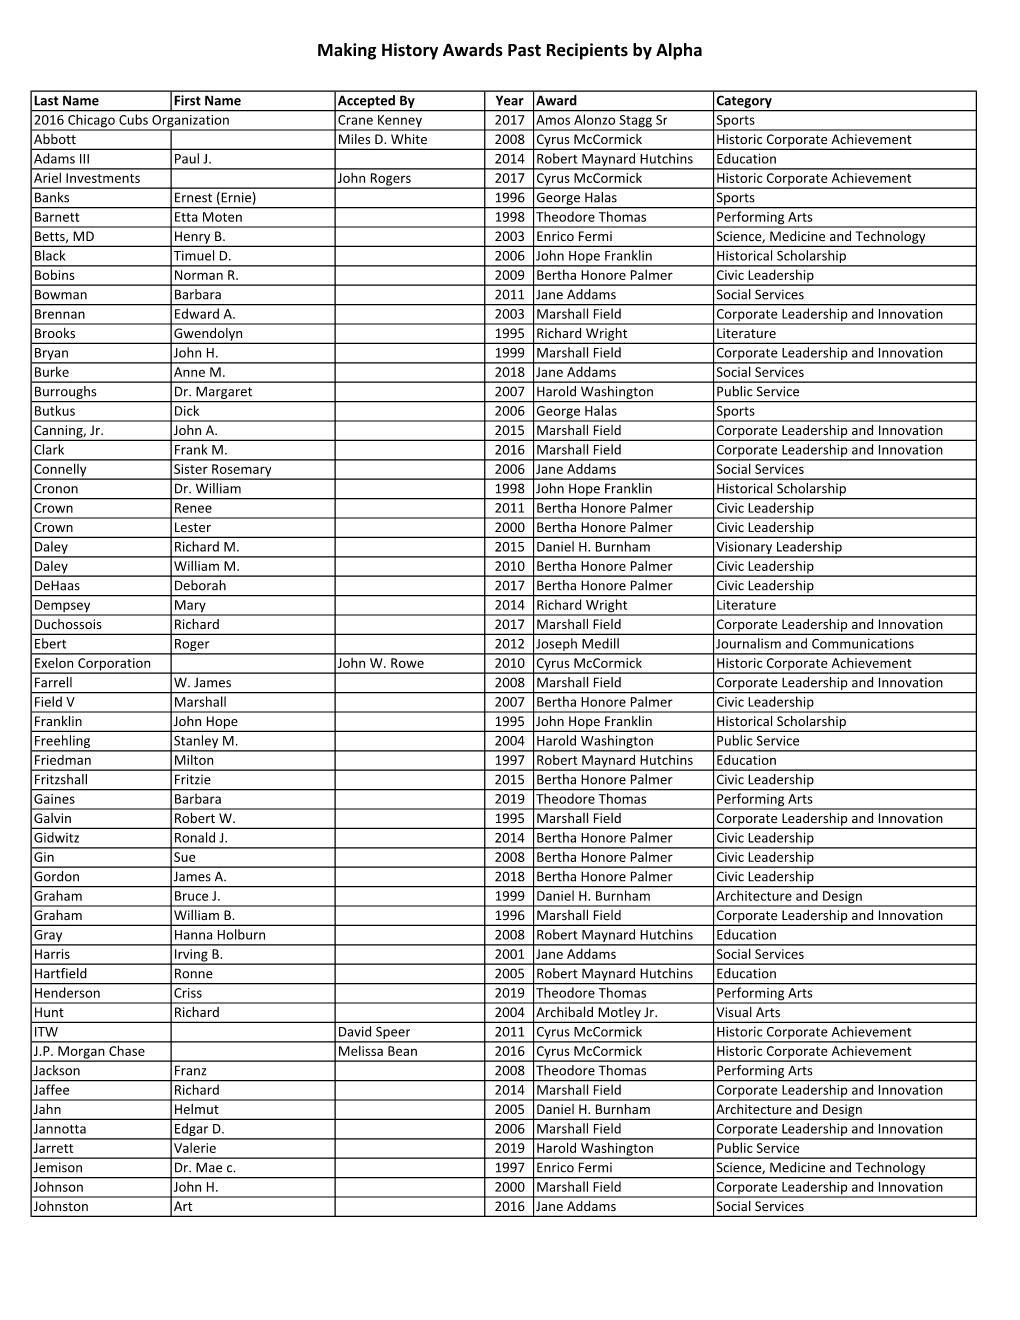 MHA Recipient List by Alpha 1995-2020.Xlsx